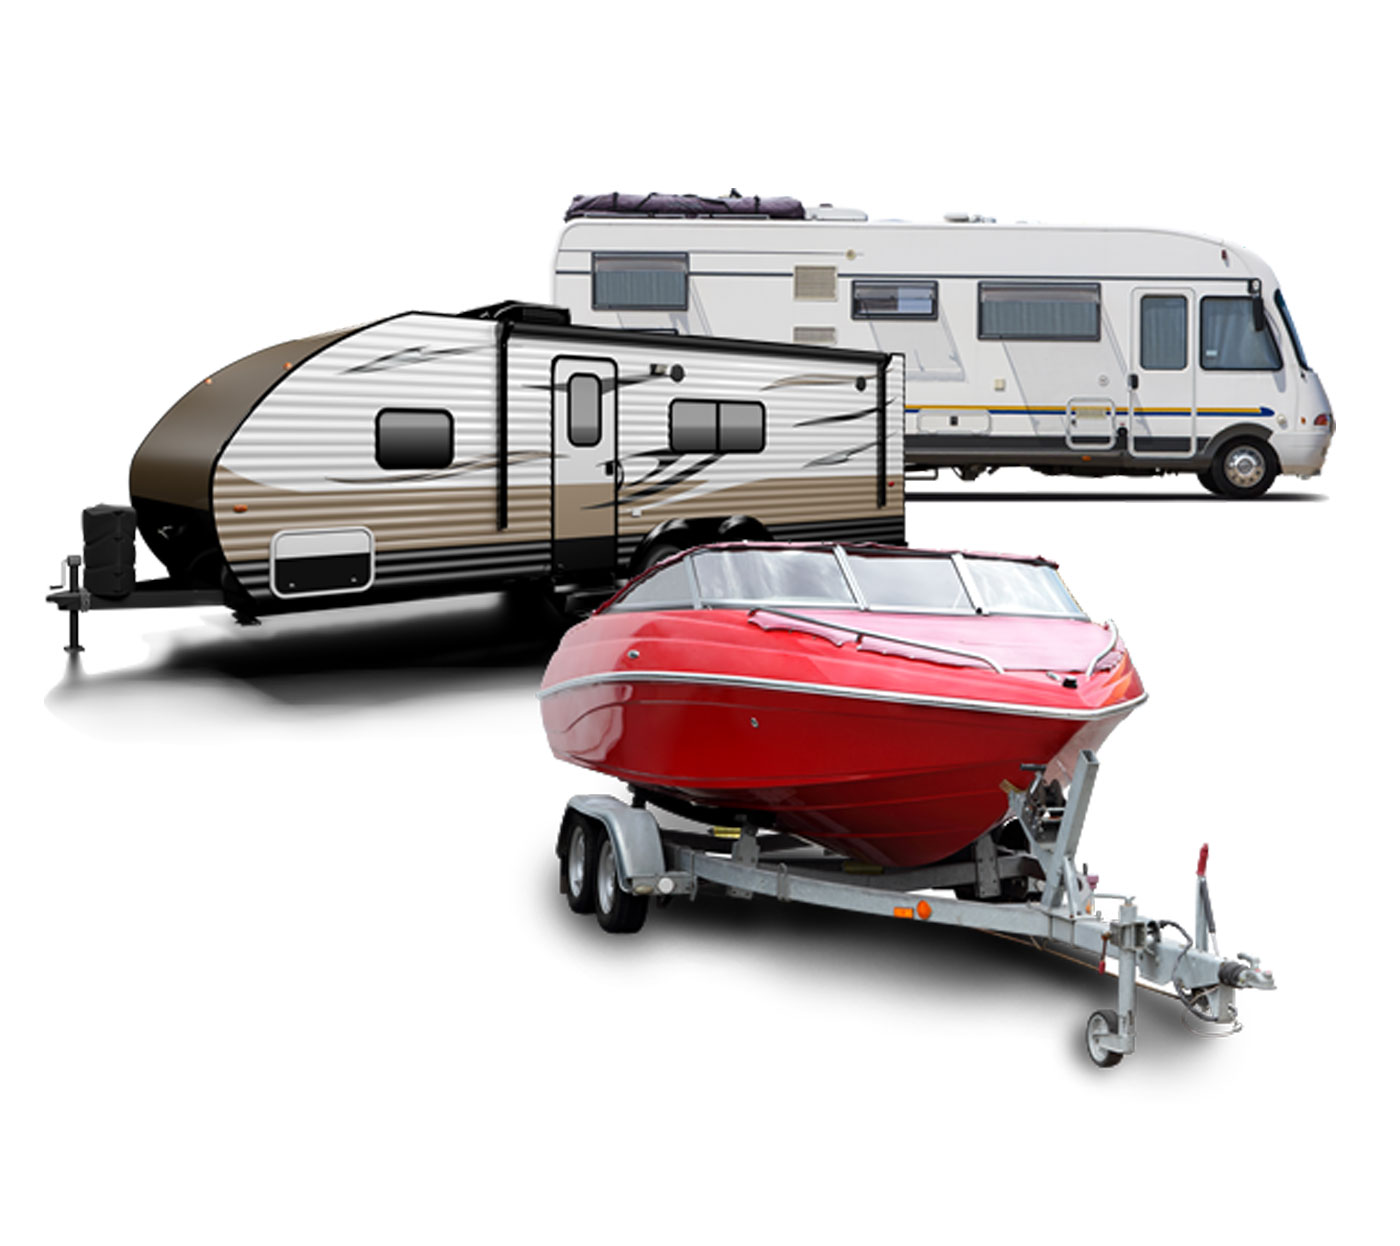 Boat Camper RV Trailer Storage Muskingum County Fairgrounds